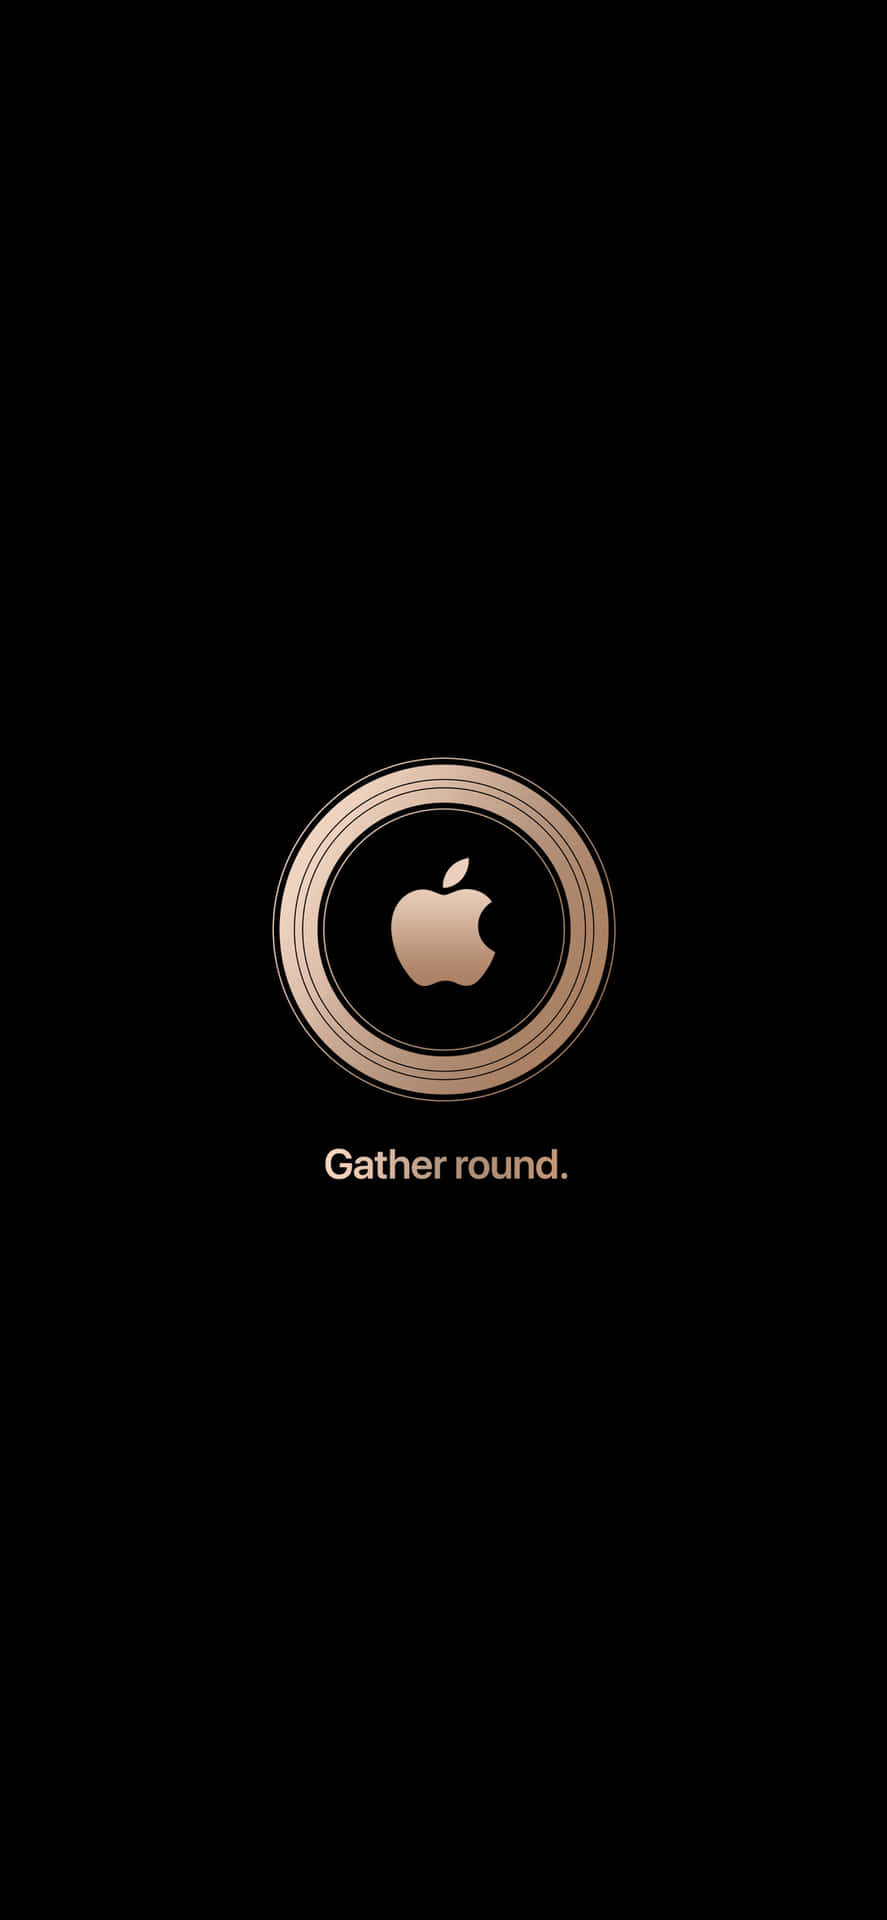 Títulodel Logotipo De Apple Para El Iphone X Fondo de pantalla